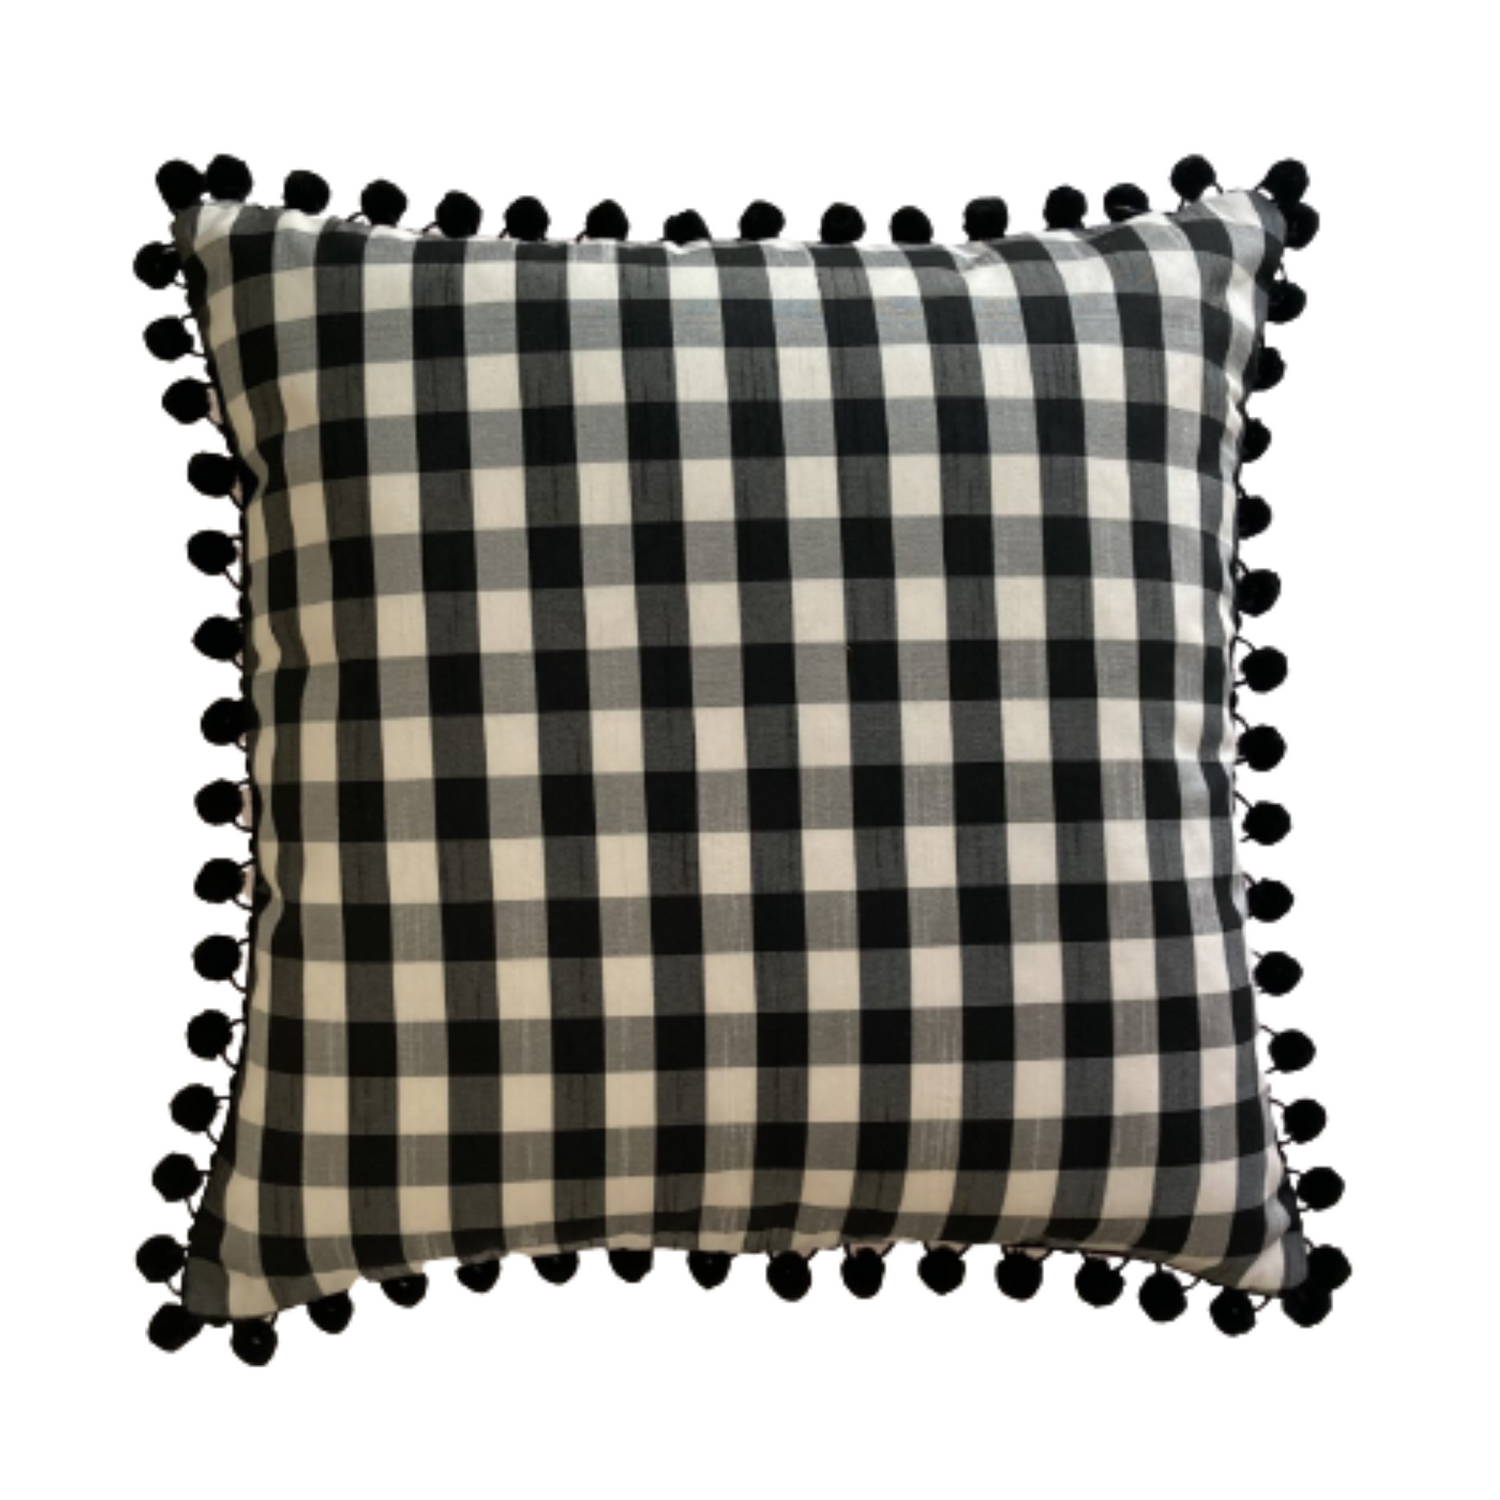 Marimekko Unikko Poppy 18 x 18 Square Decorative Pillow with Down Feather Insert